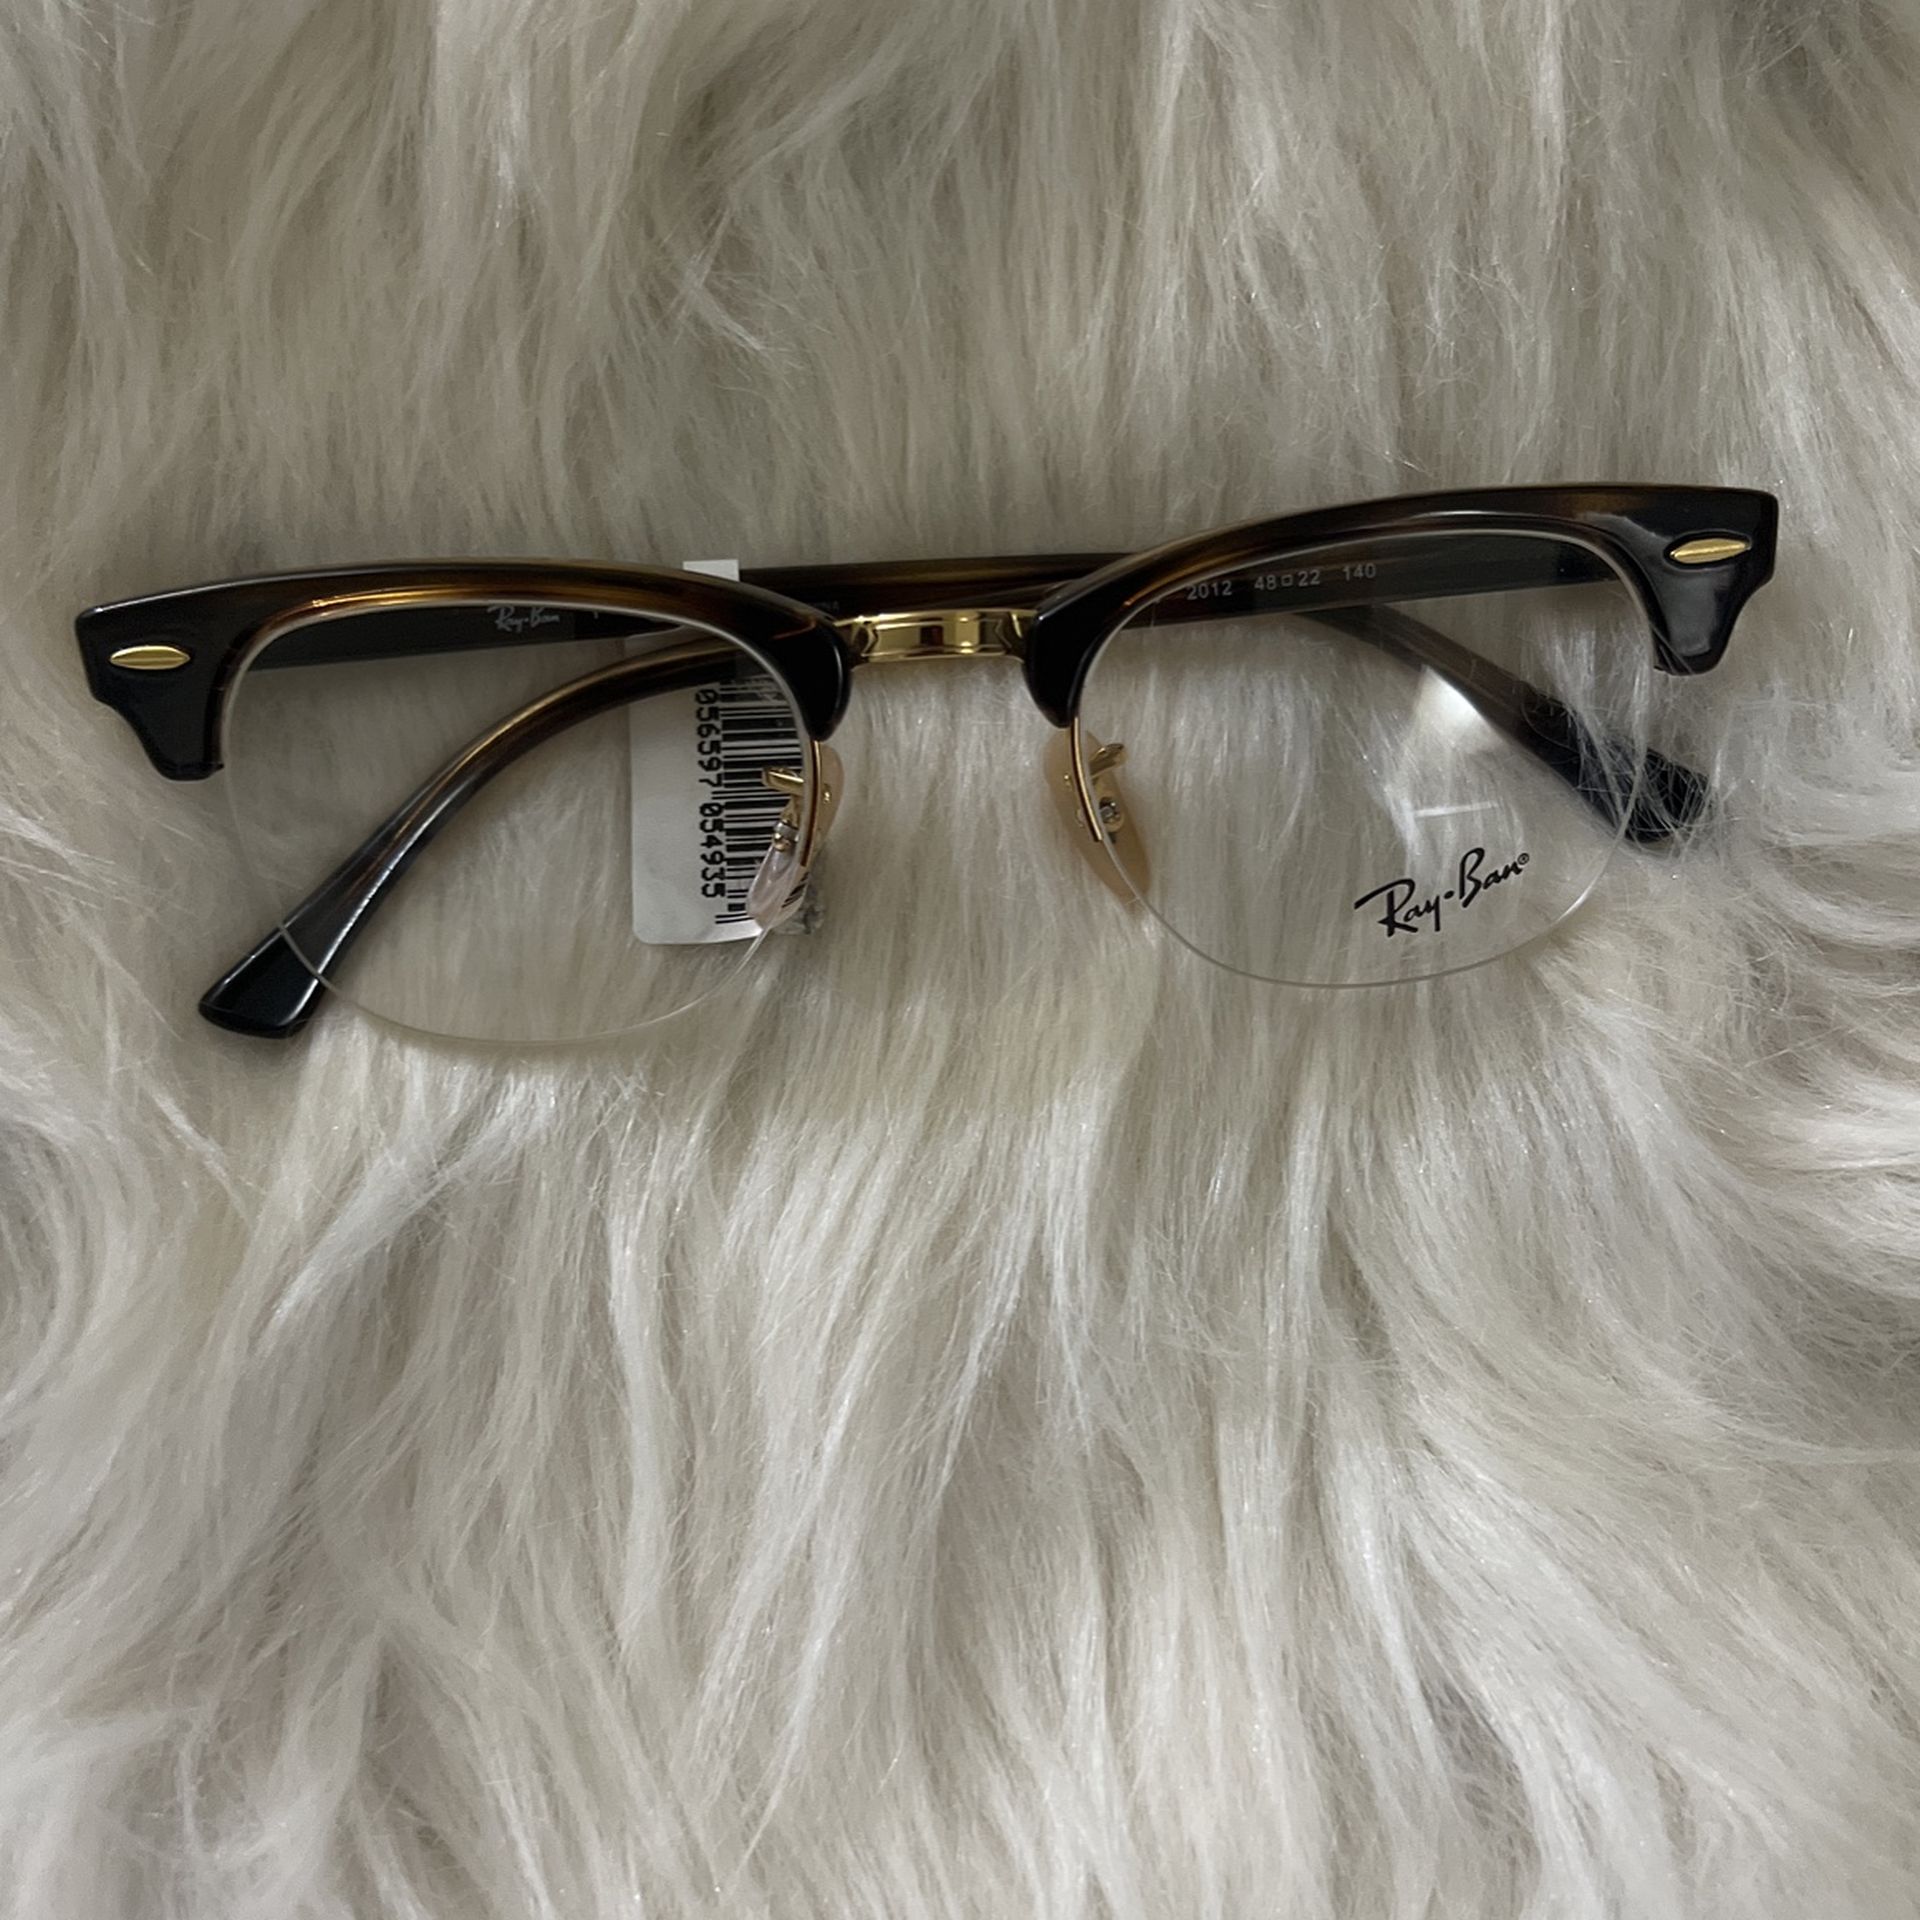 Authentic Designer Rx Glasses Frames 